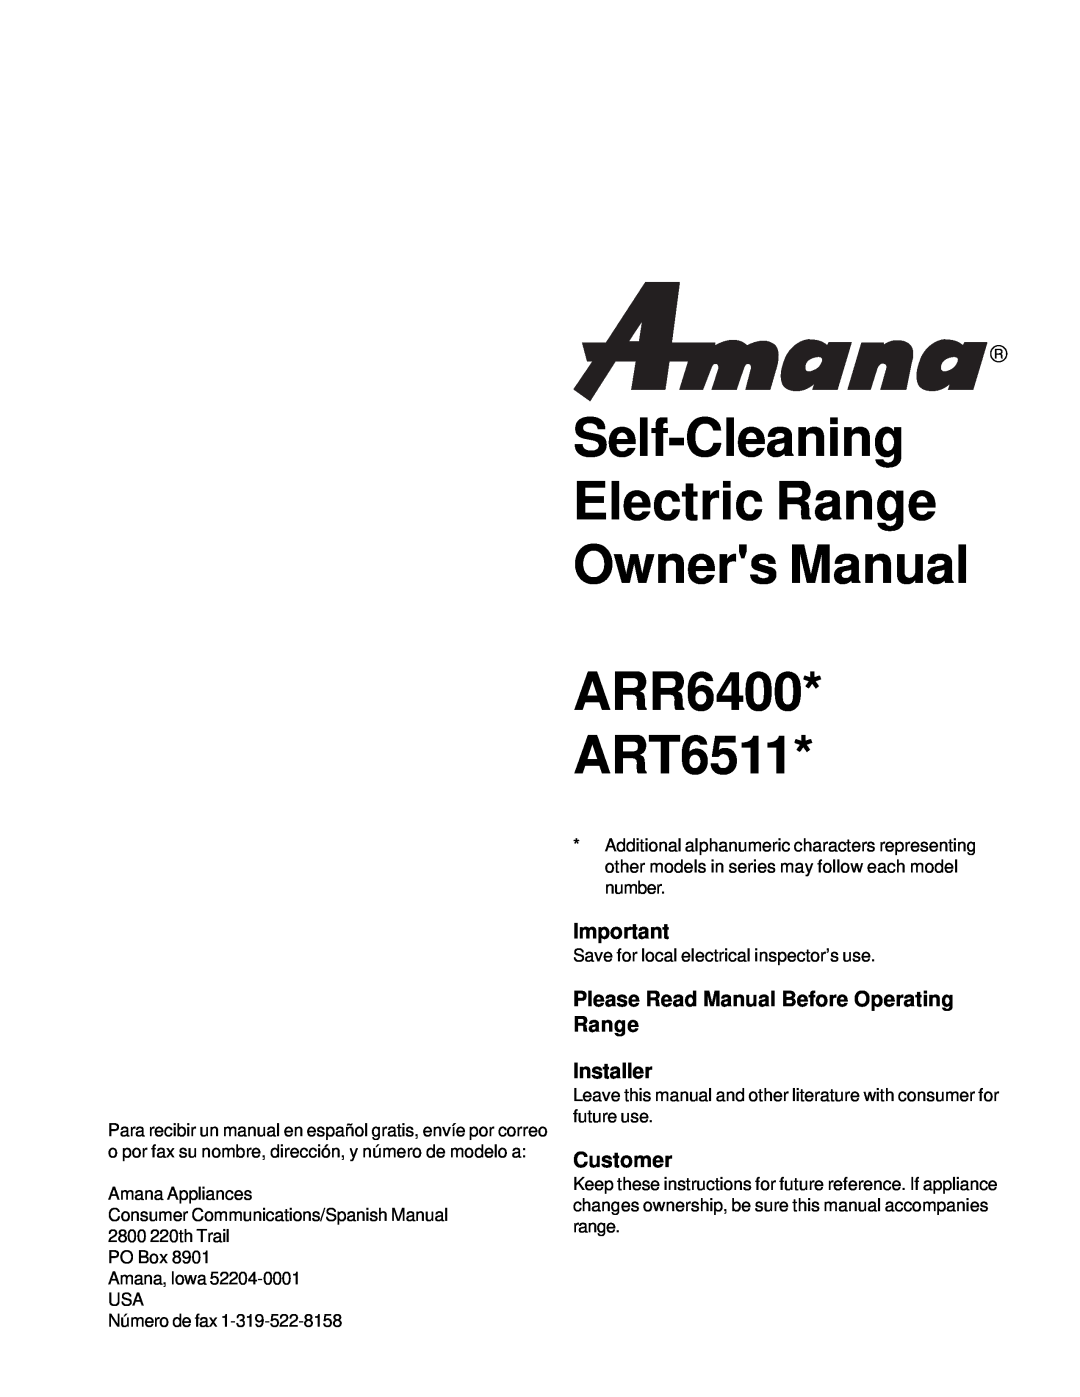 Amana ARR6400/ART6511 owner manual Please Read Manual Before Operating Range Installer, Customer 